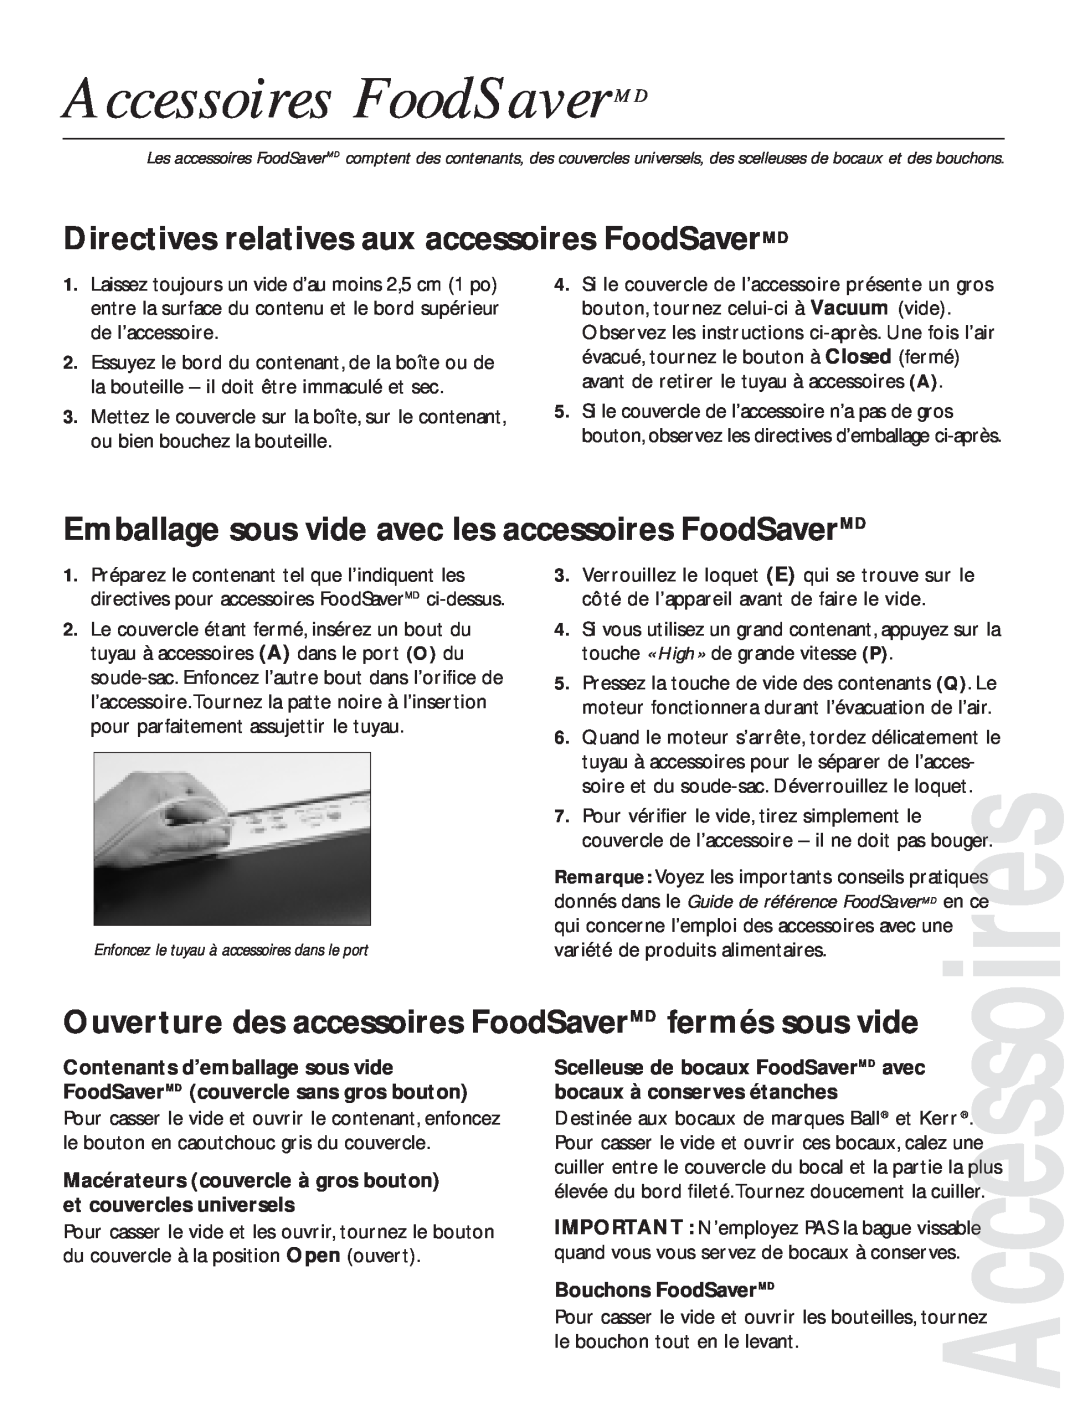 FoodSaver V2820 quick start Accessoires FoodSaverMD, Directives relatives aux accessoires FoodSaverMD 